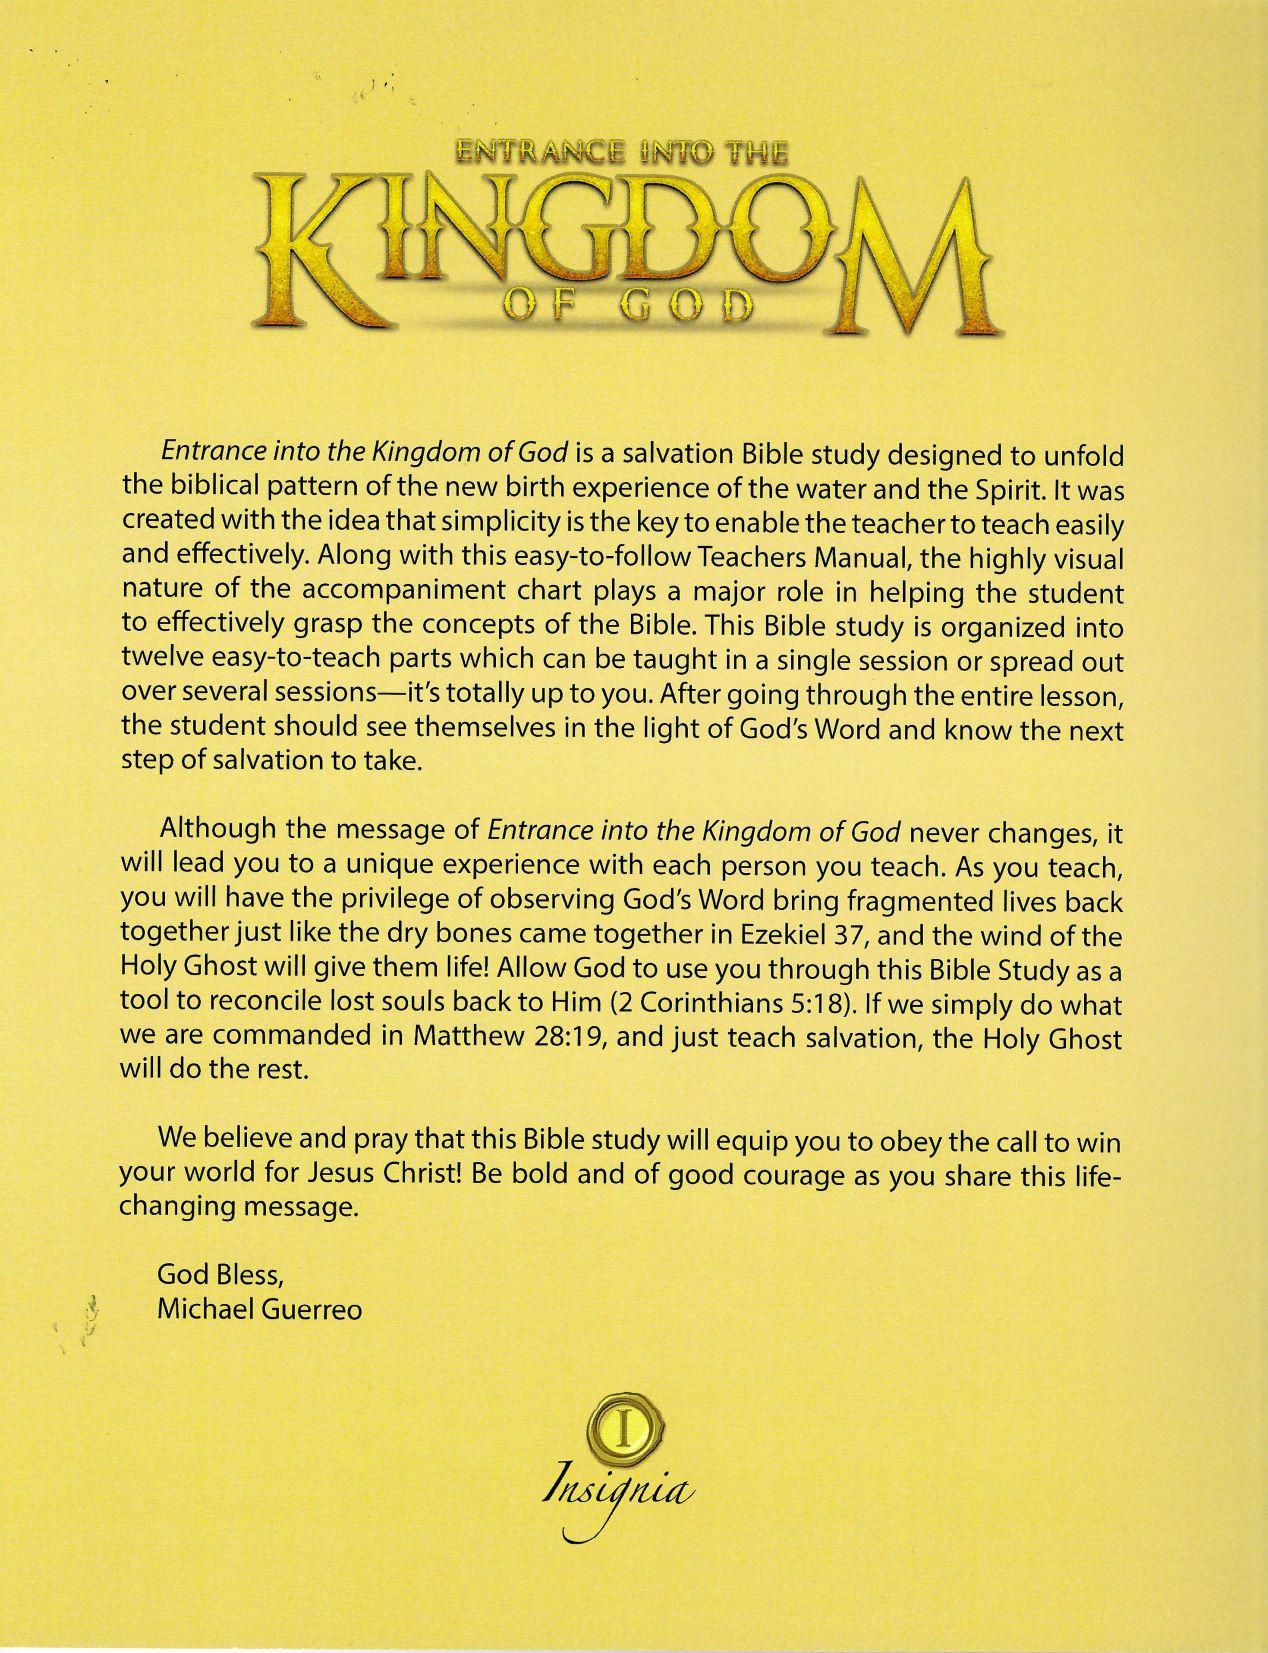 Entrance into the Kingdom of God - Michael Guerrero